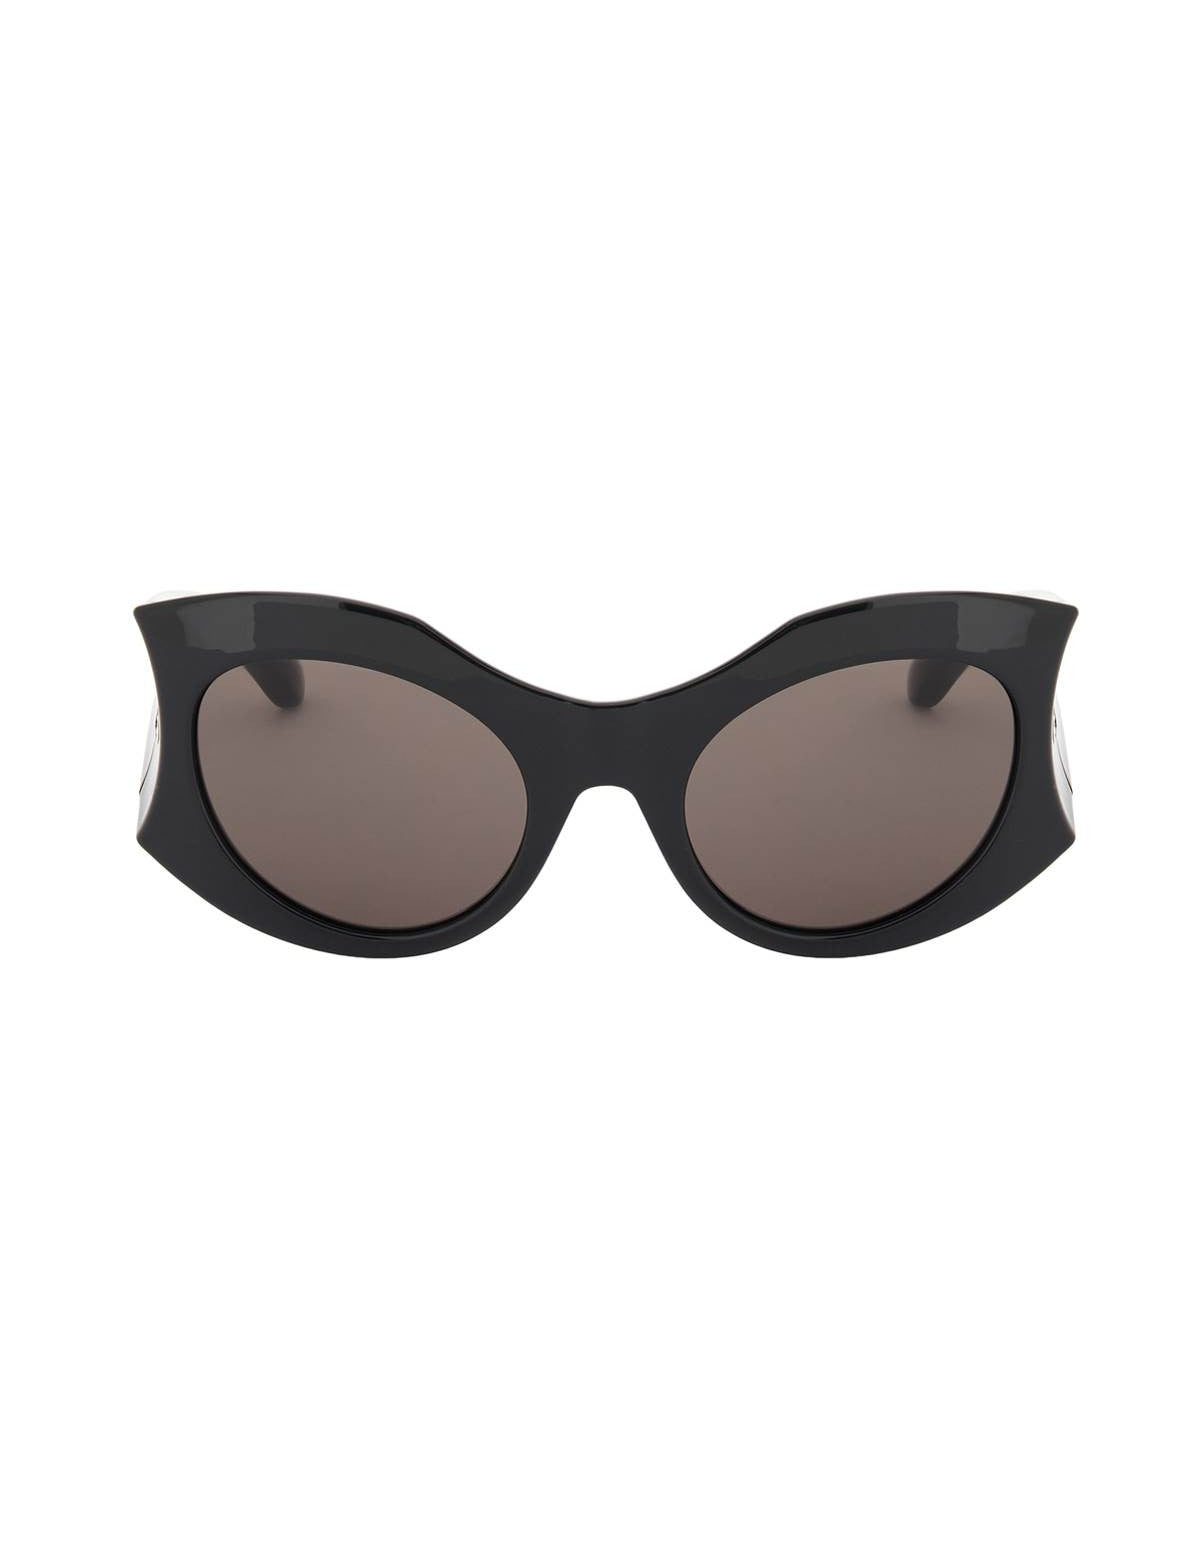 balenciaga-hourglass-round-sunglasses.jpg